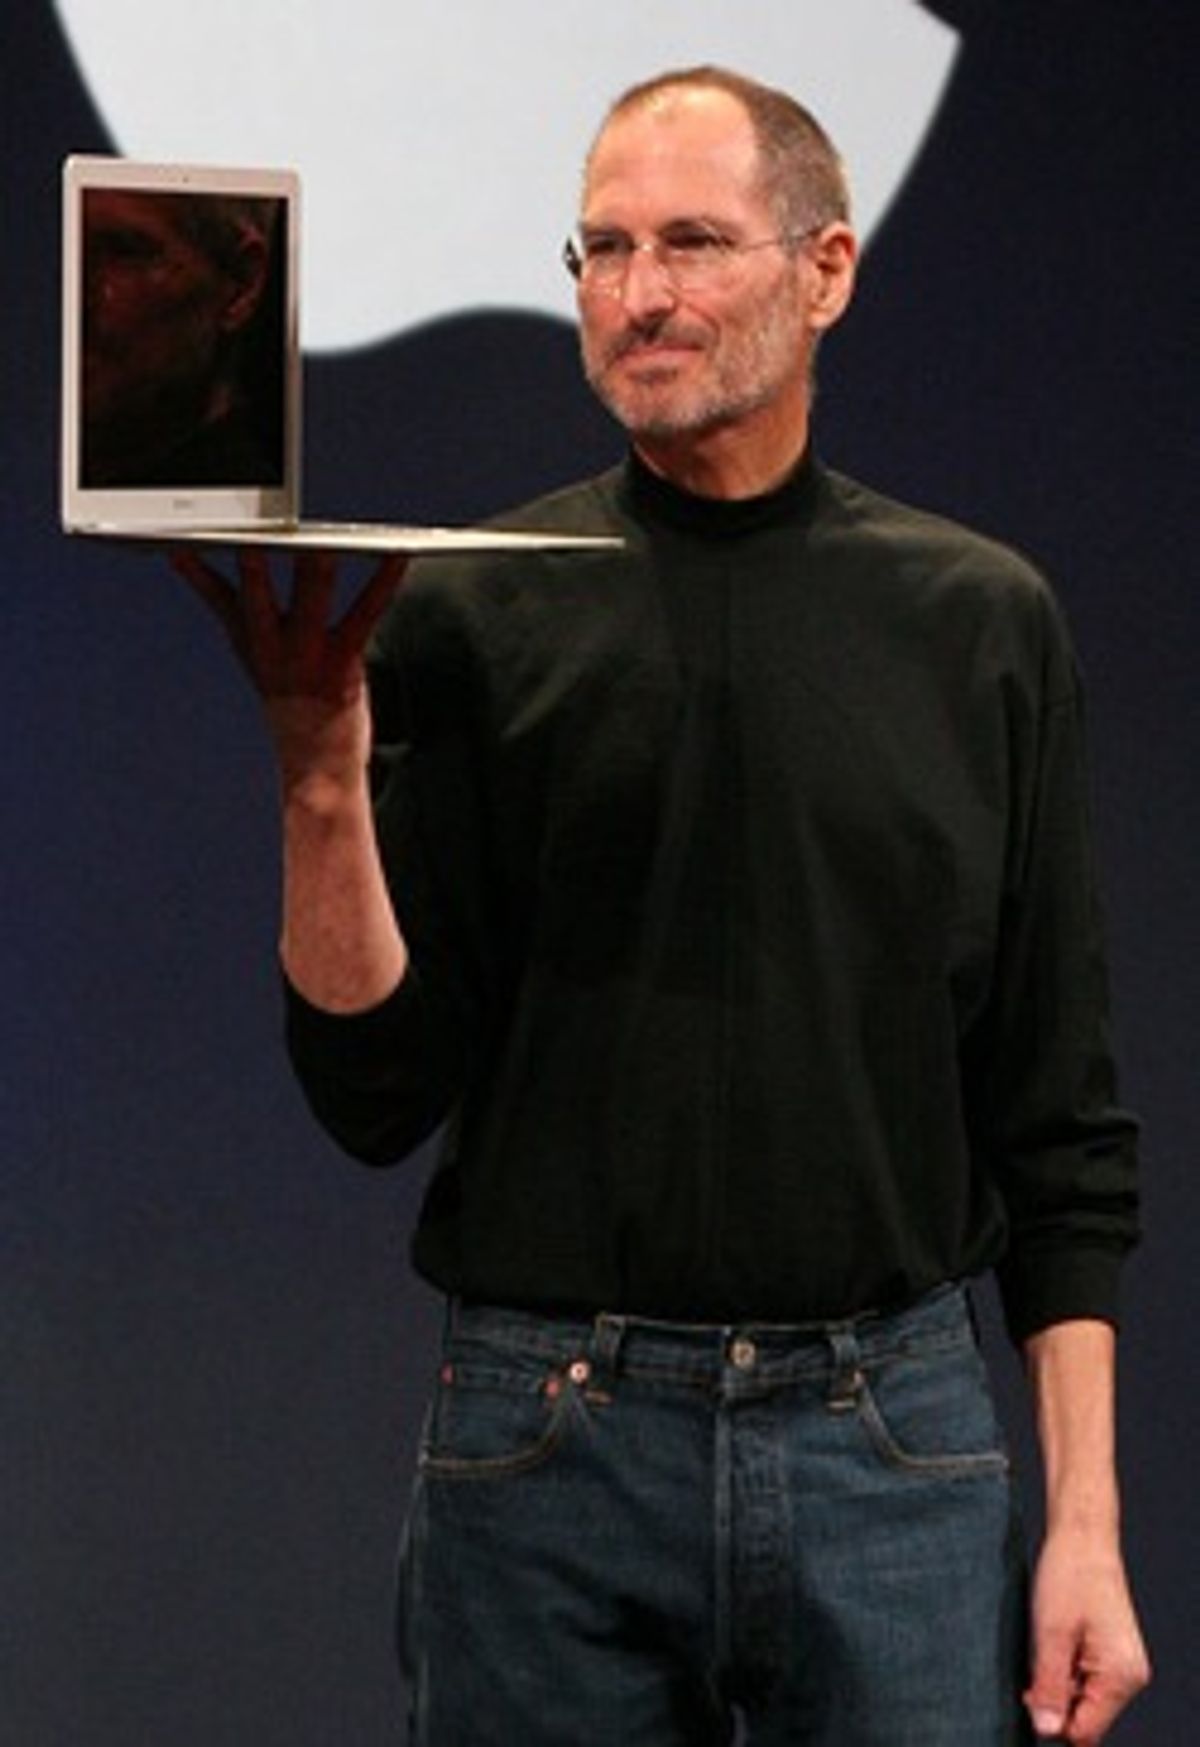 The End of the Steve Jobs Era